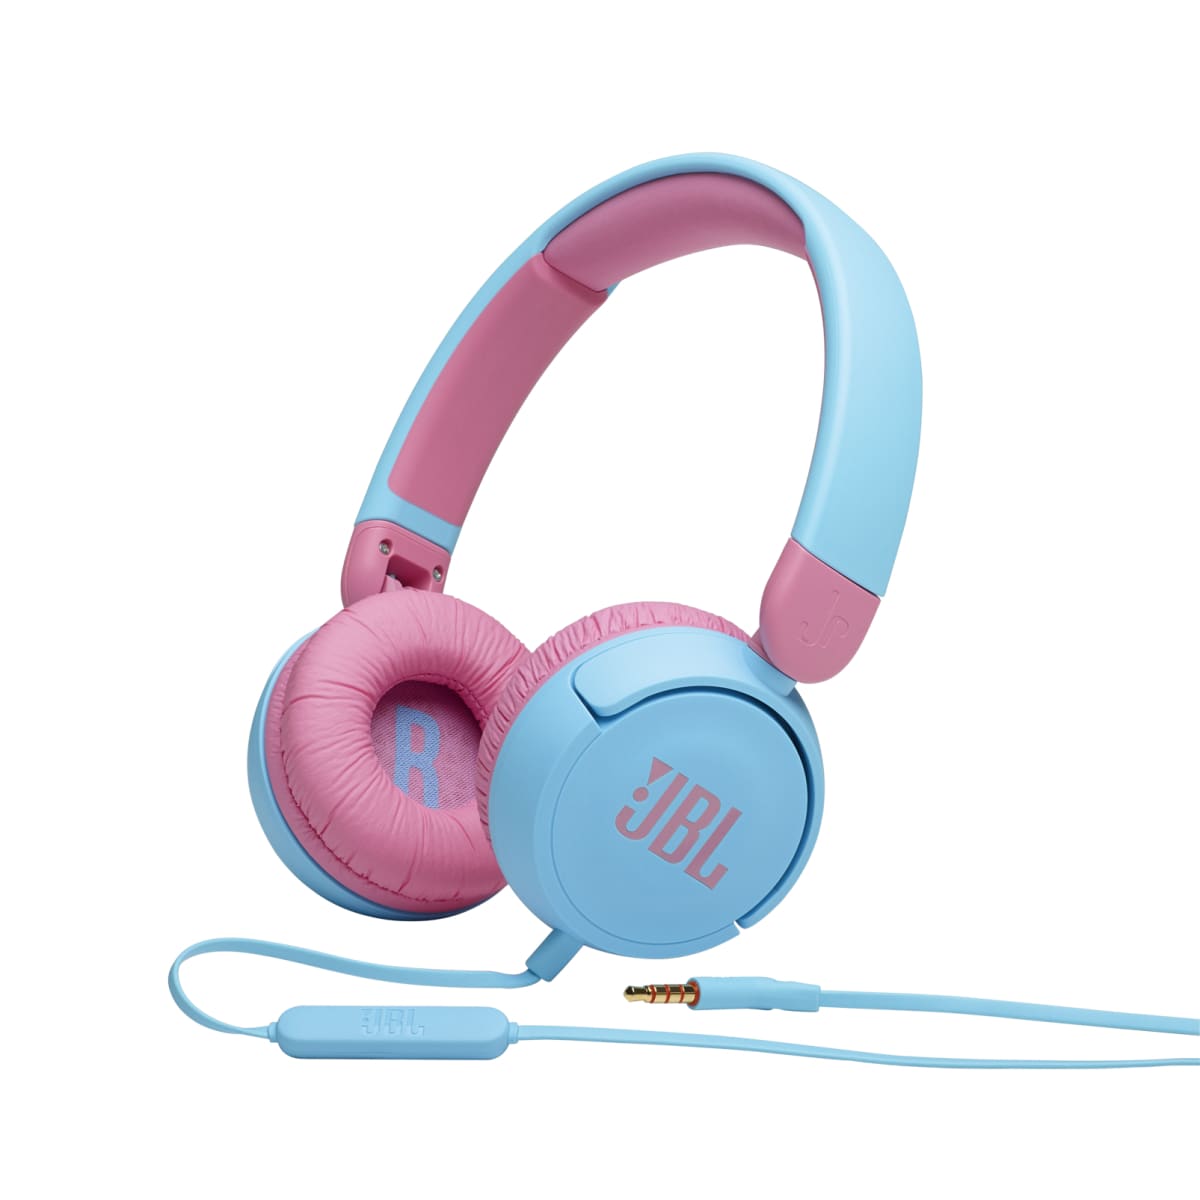 JBL JR310 Kids on-ear headphones - Blue - Headphone